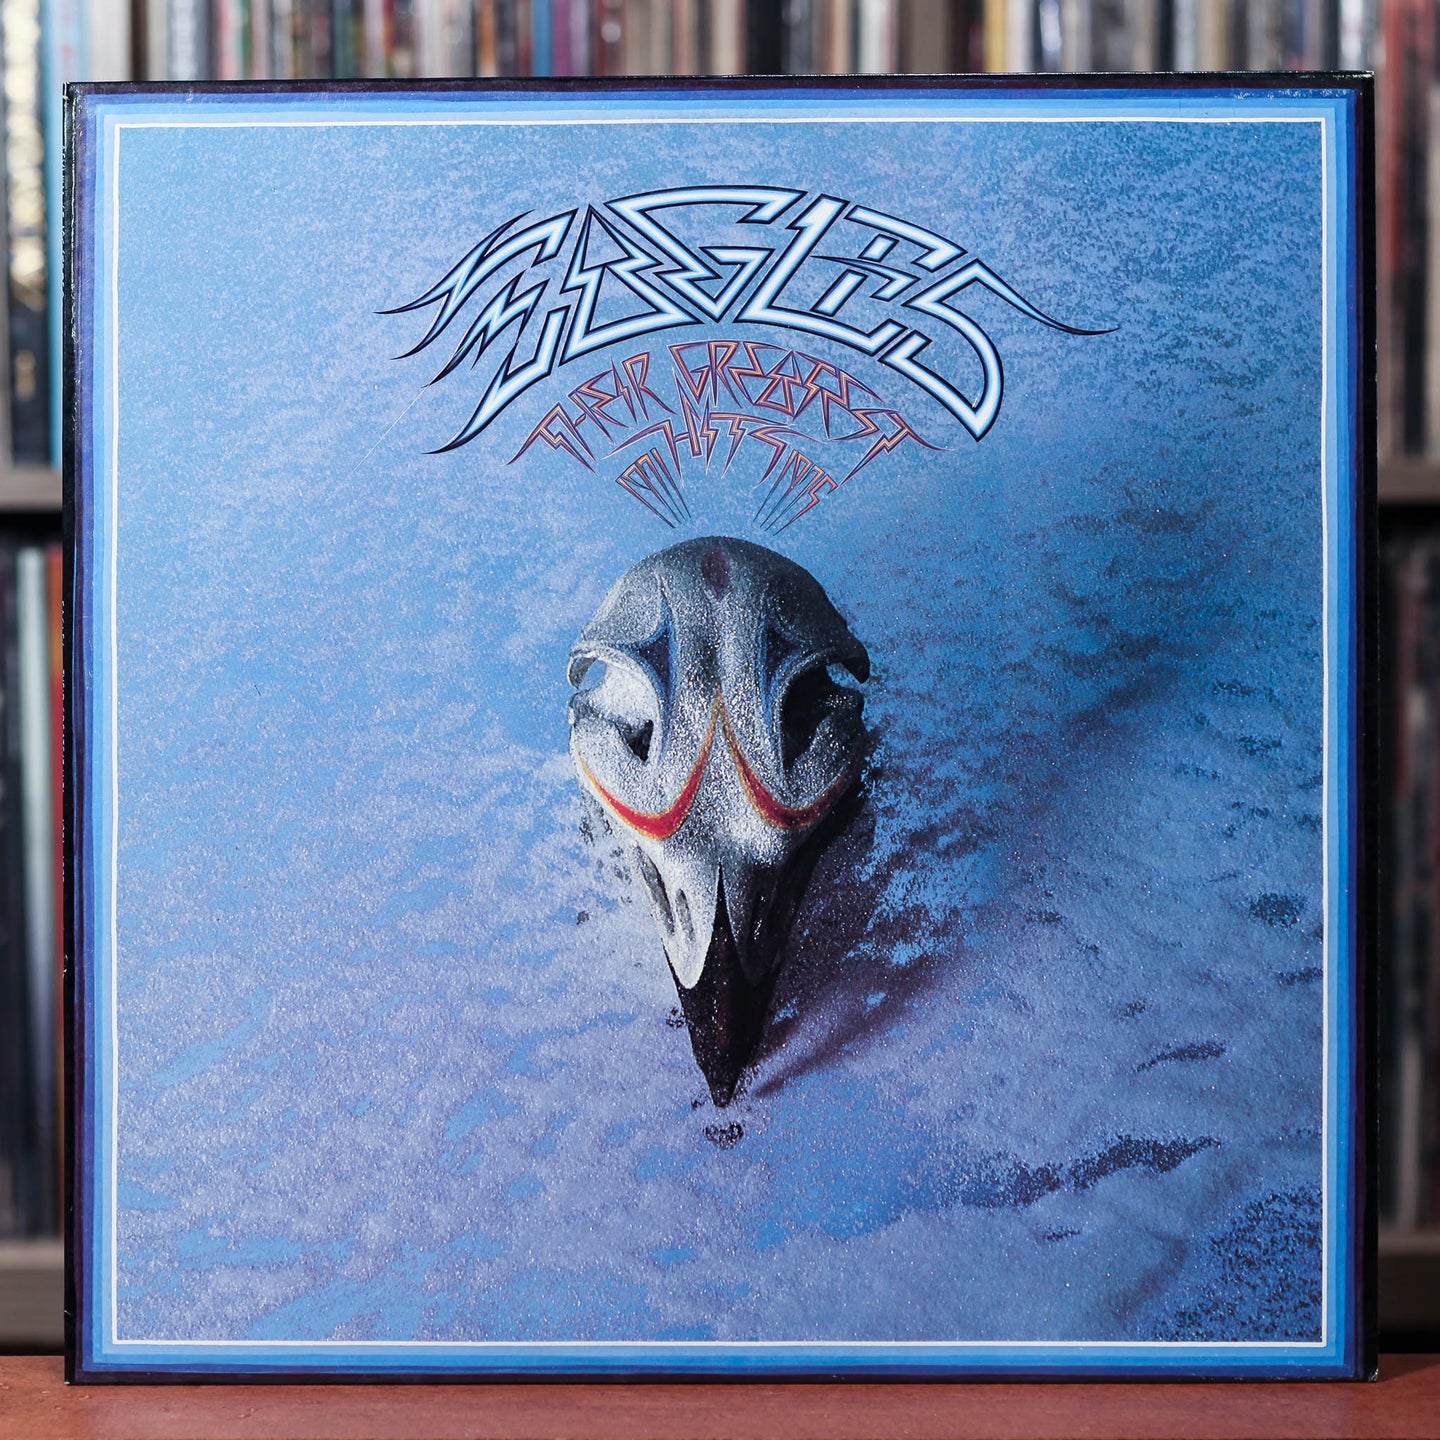 Eagles - Their Greatest Hits - 1976 Elektra - VG++/VG++